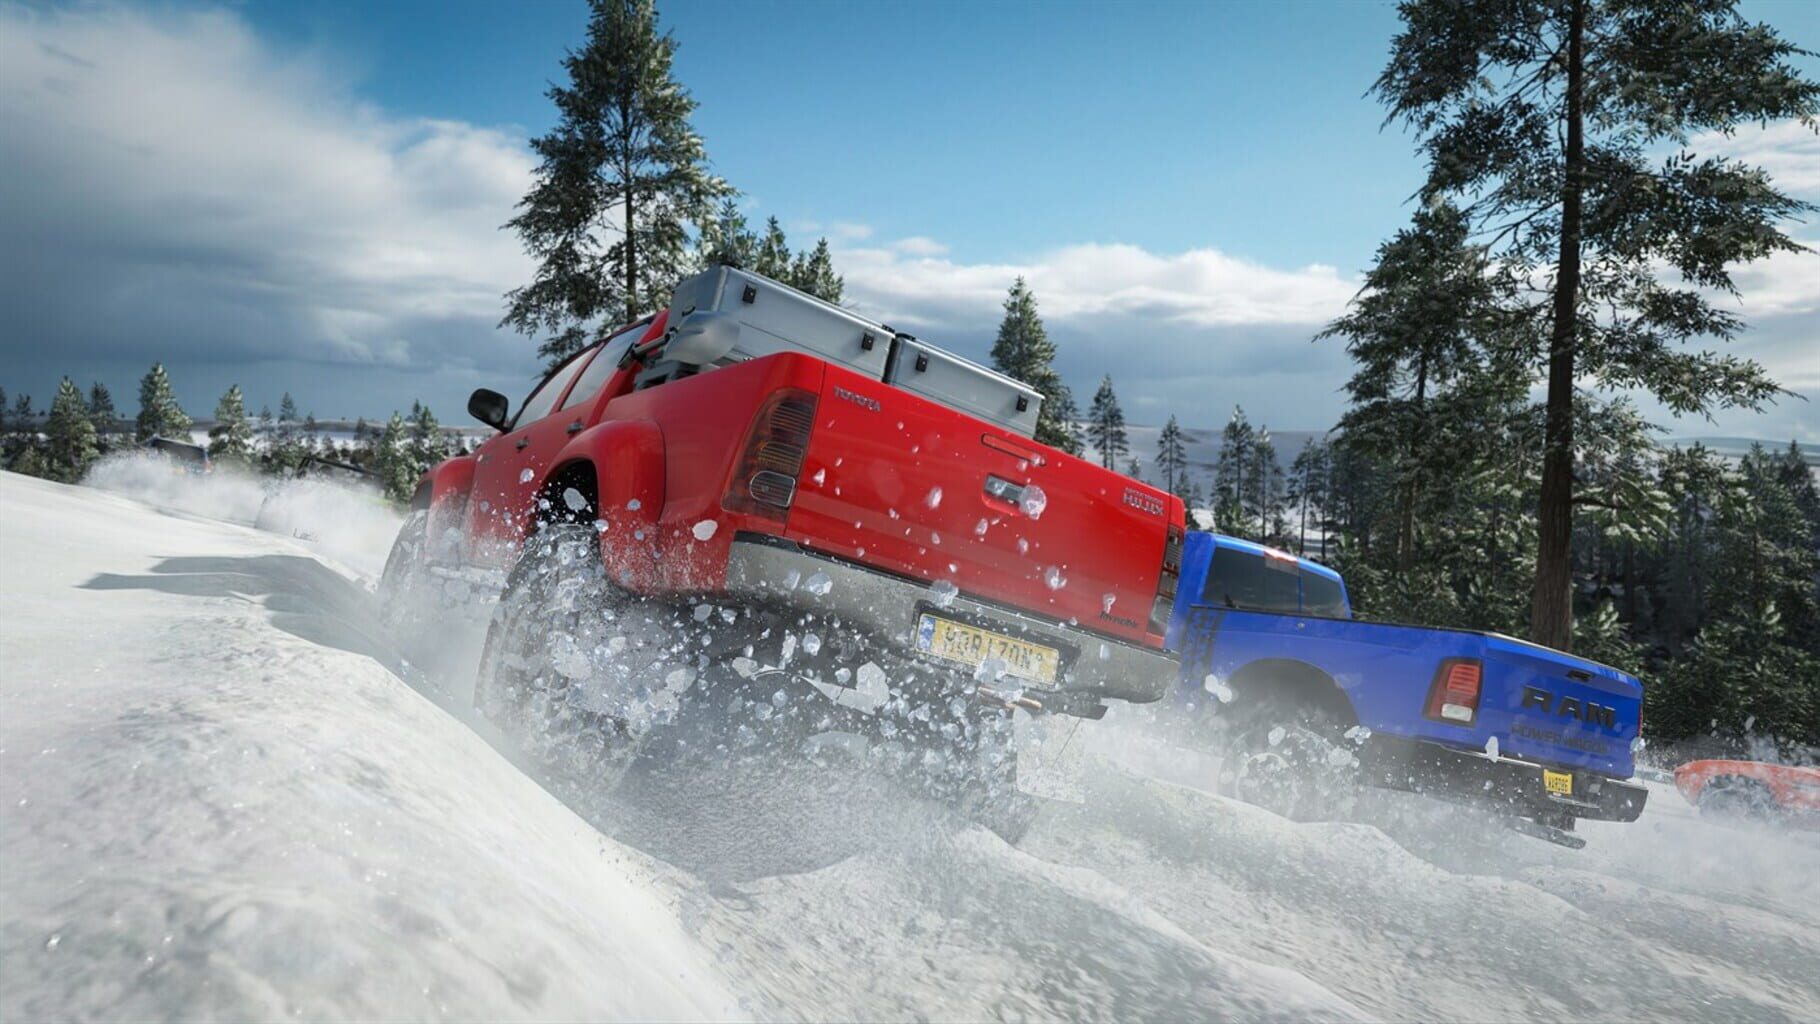 Forza Horizon 4: Ultimate Edition Image